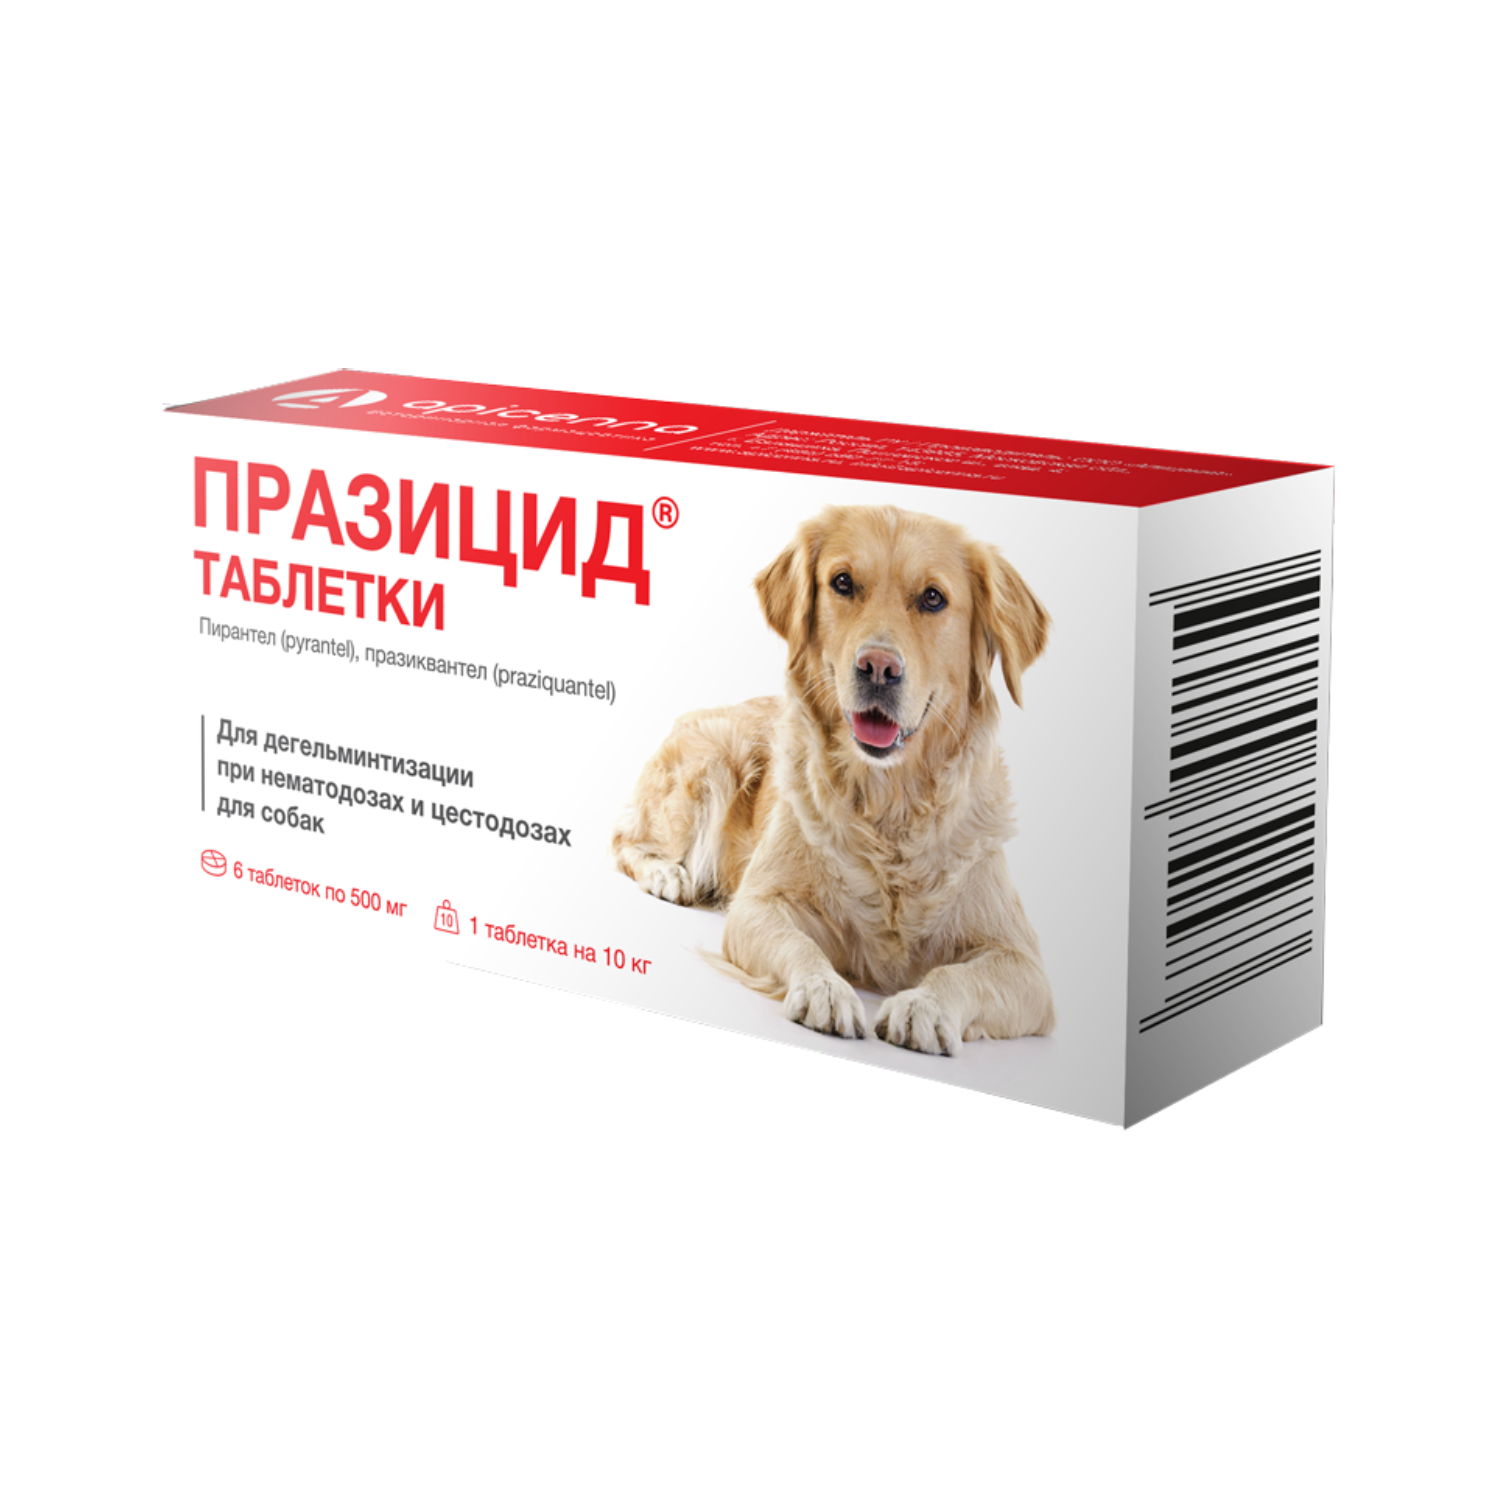 Таблетки для собак от гельминтов Apicenna Празицид 6*500мг - фото 1